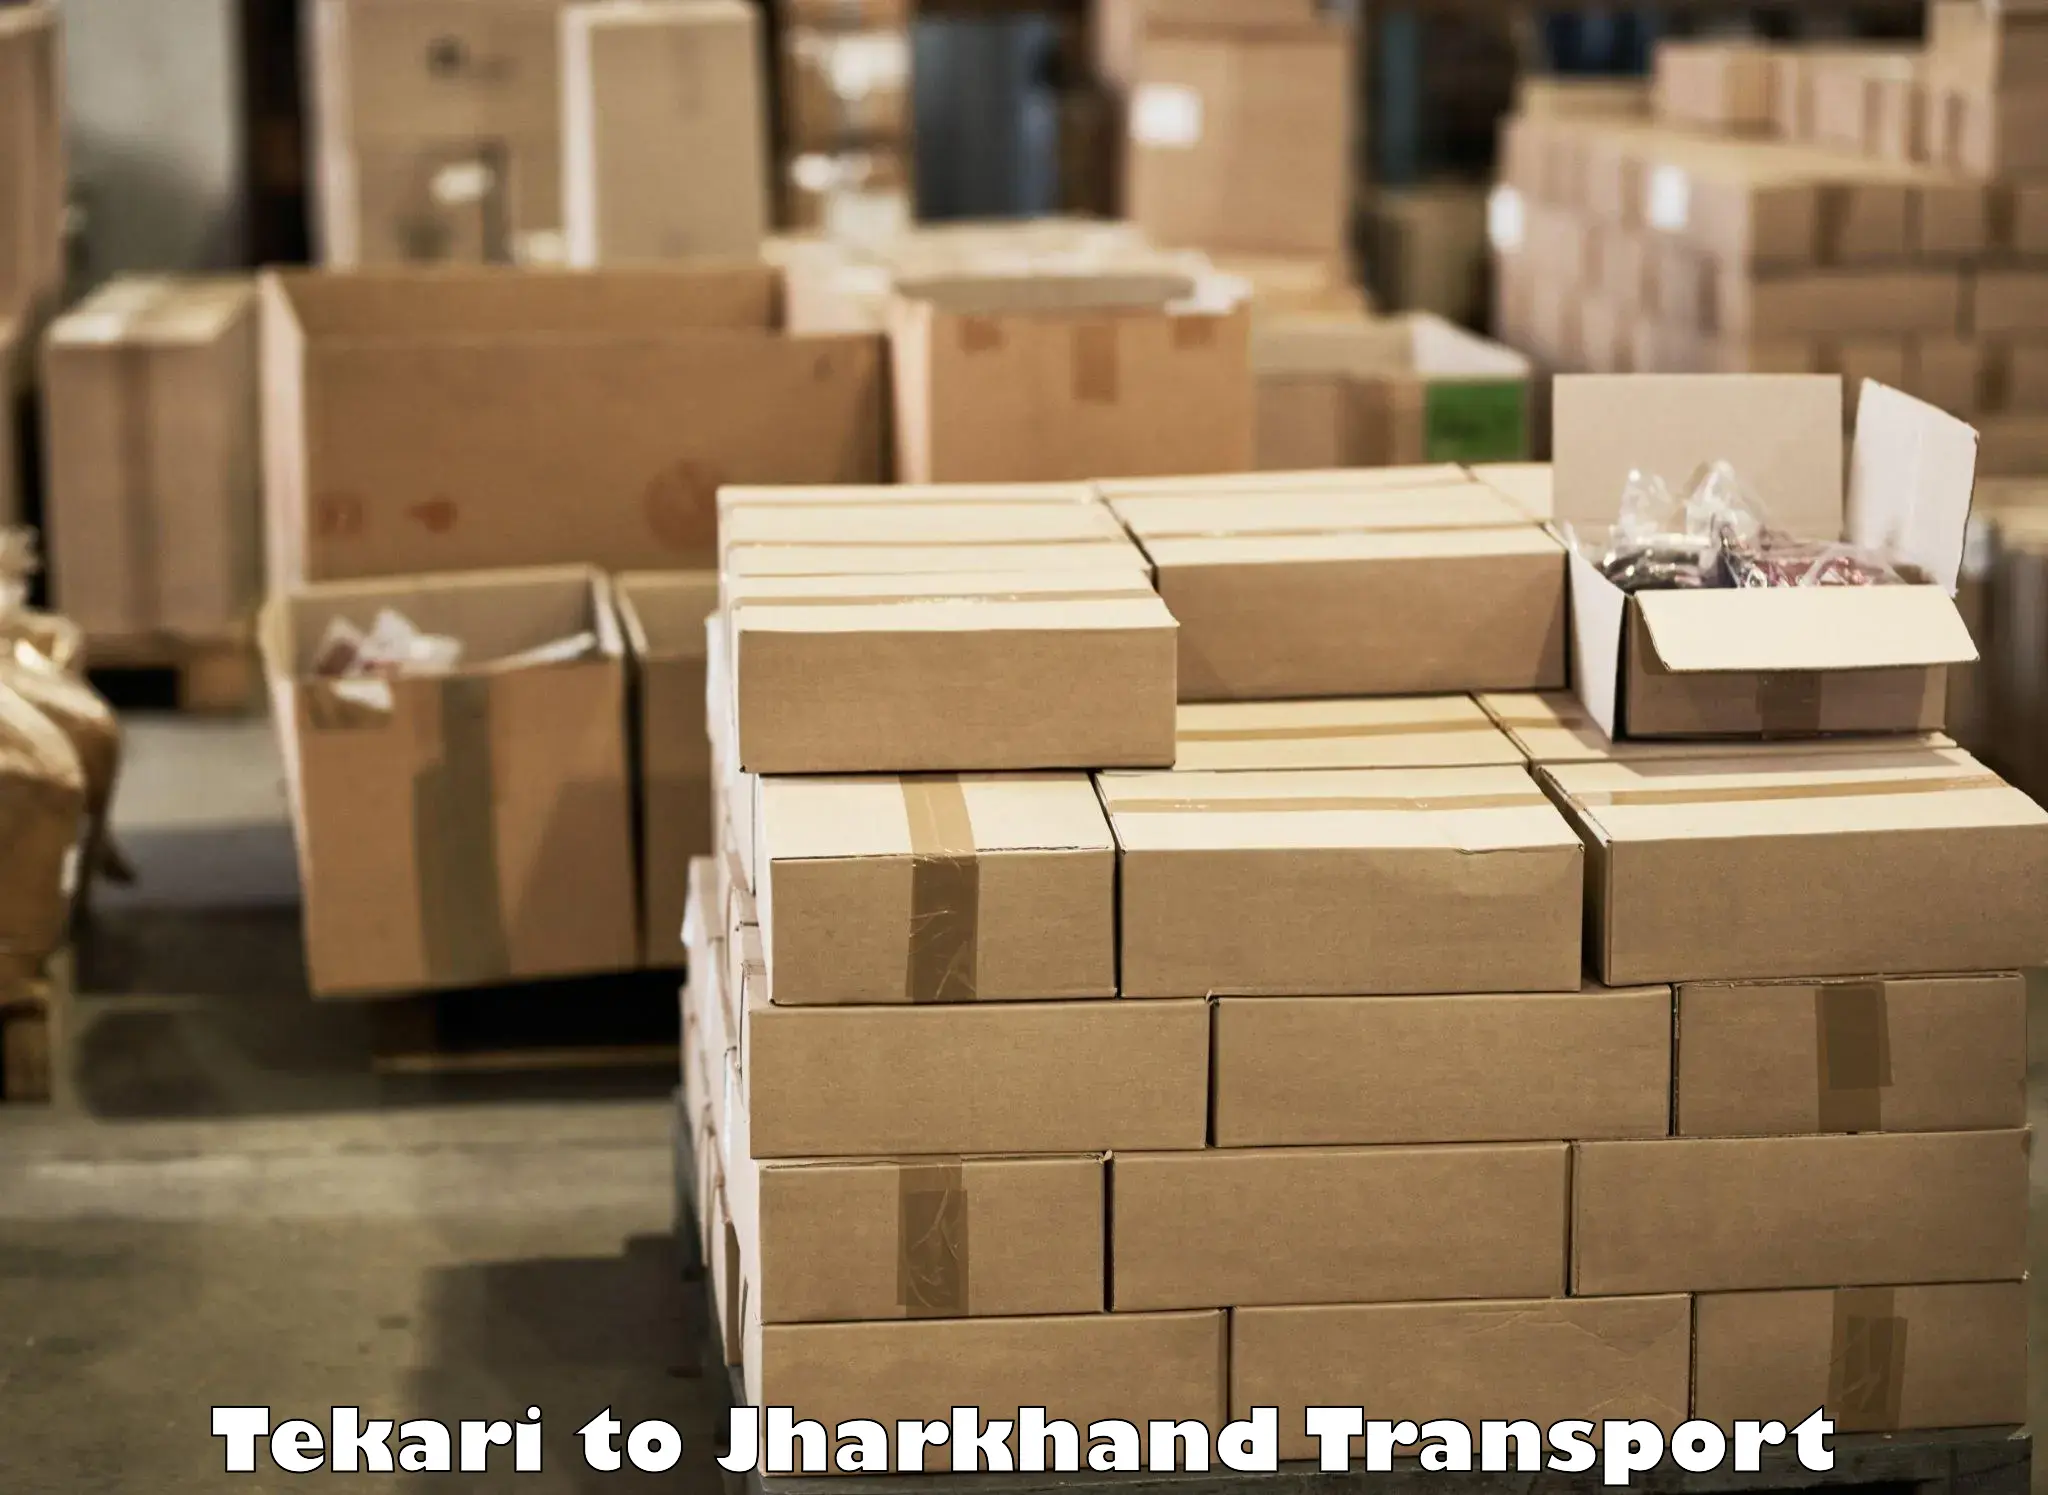 Road transport online services Tekari to Ranchi